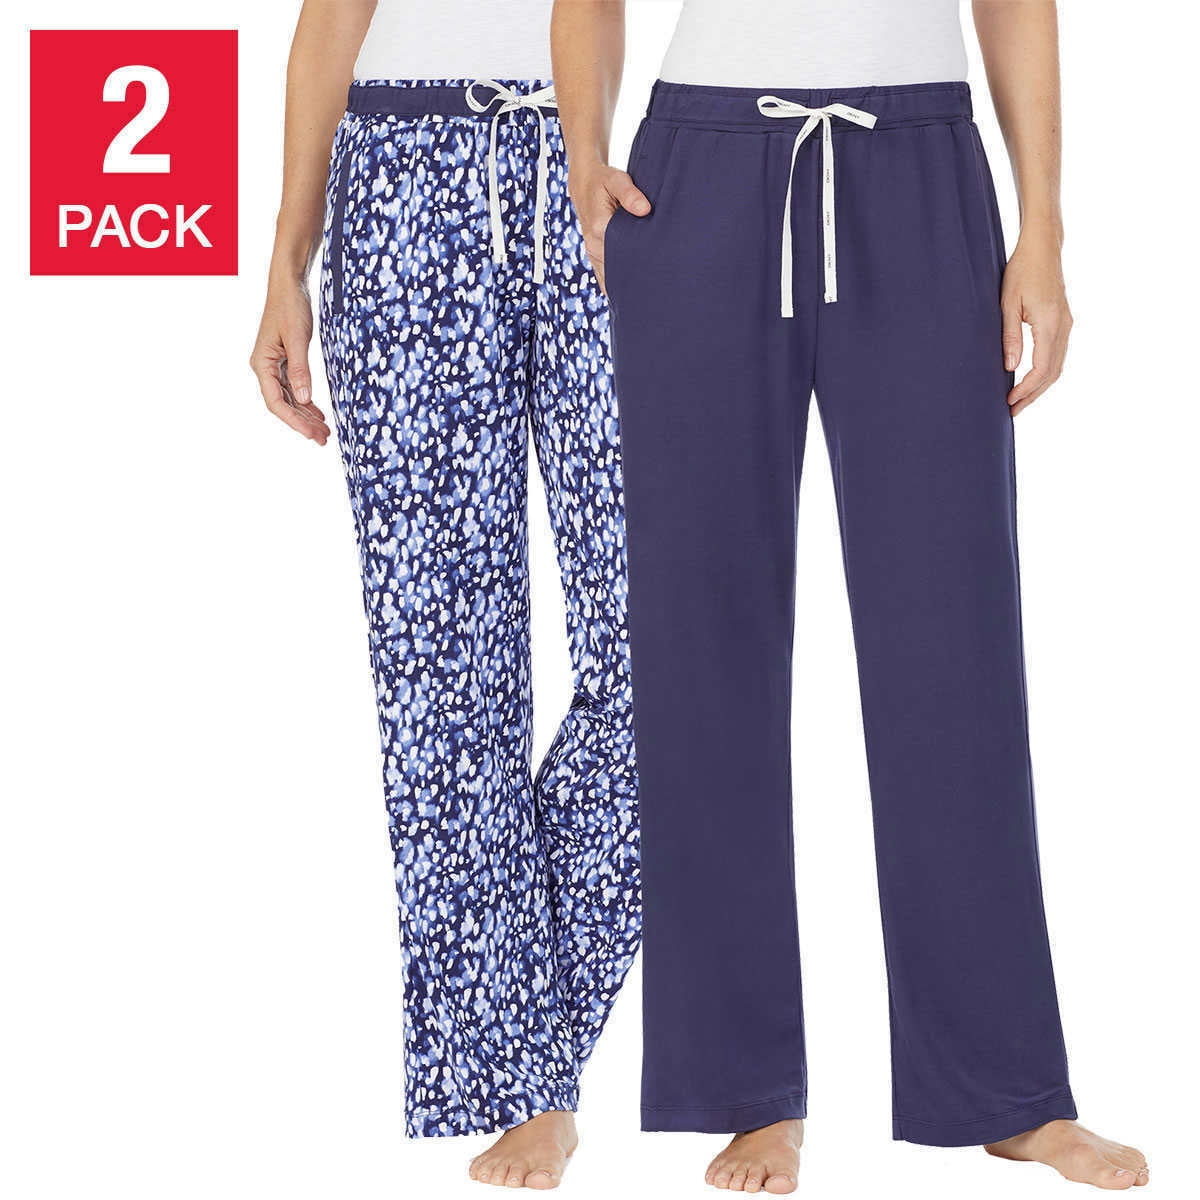 2 Pack INSIGNIA Ladies Lounge Pants Fleece Pyjamas Trousers Bottoms